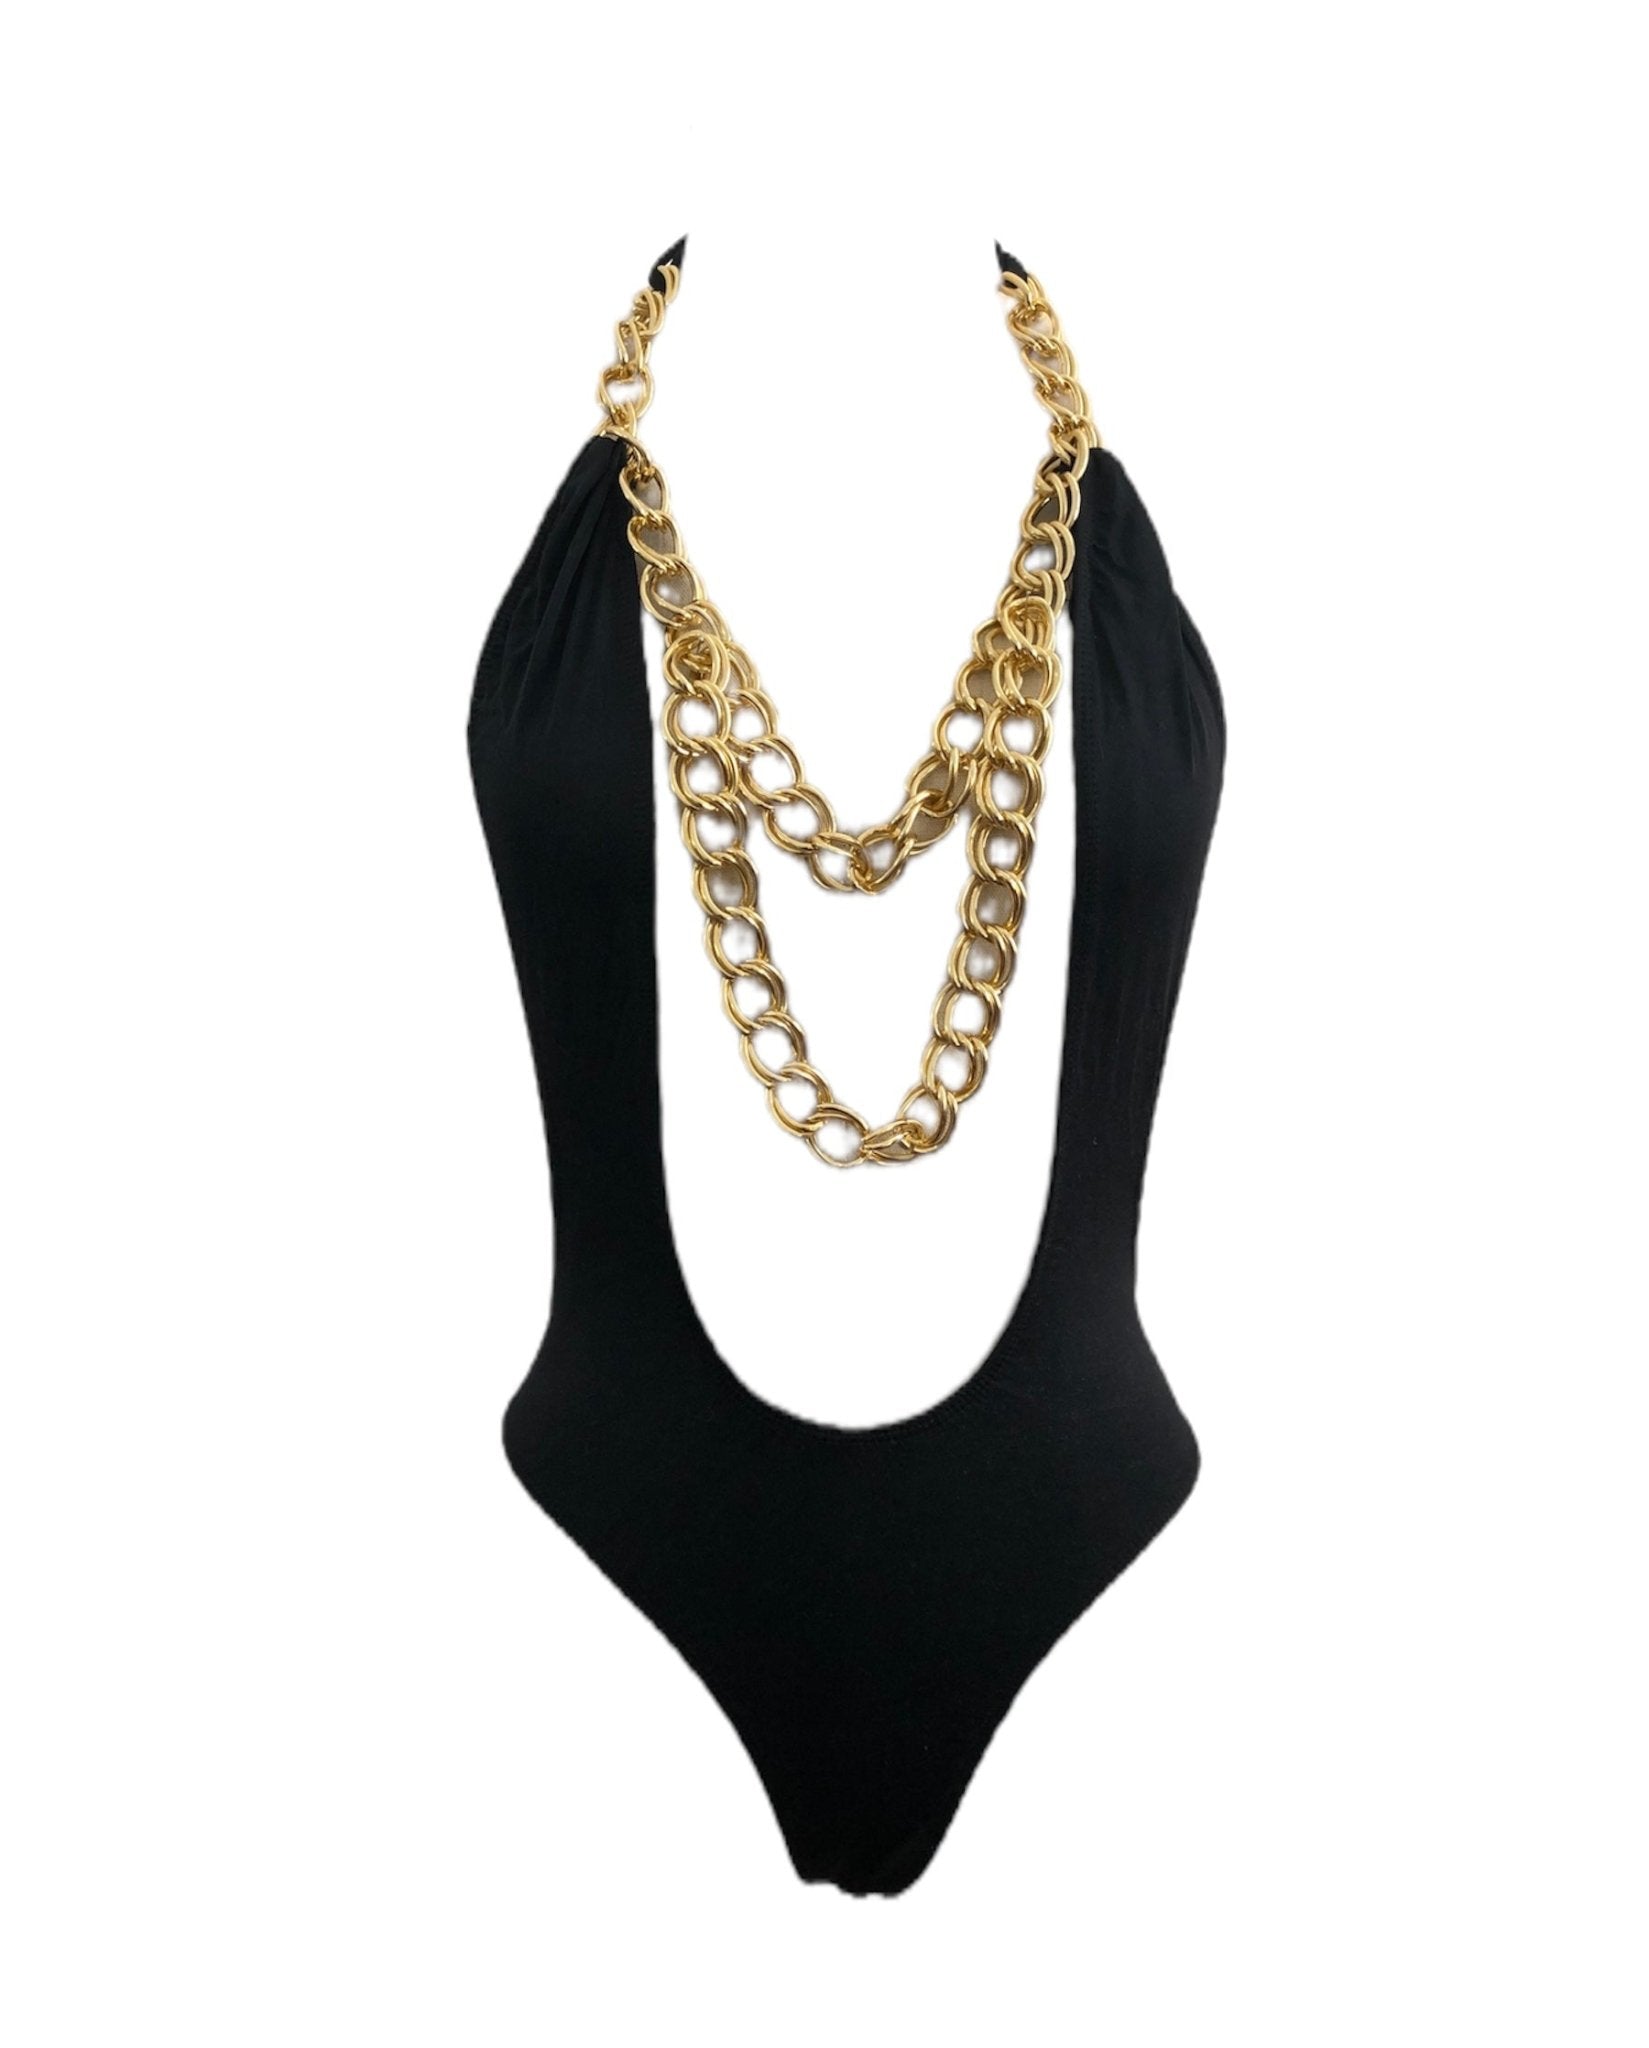 Kelsey Merritt - Sports Illustrated Swimsuit - Gabriela Pires Beachwear